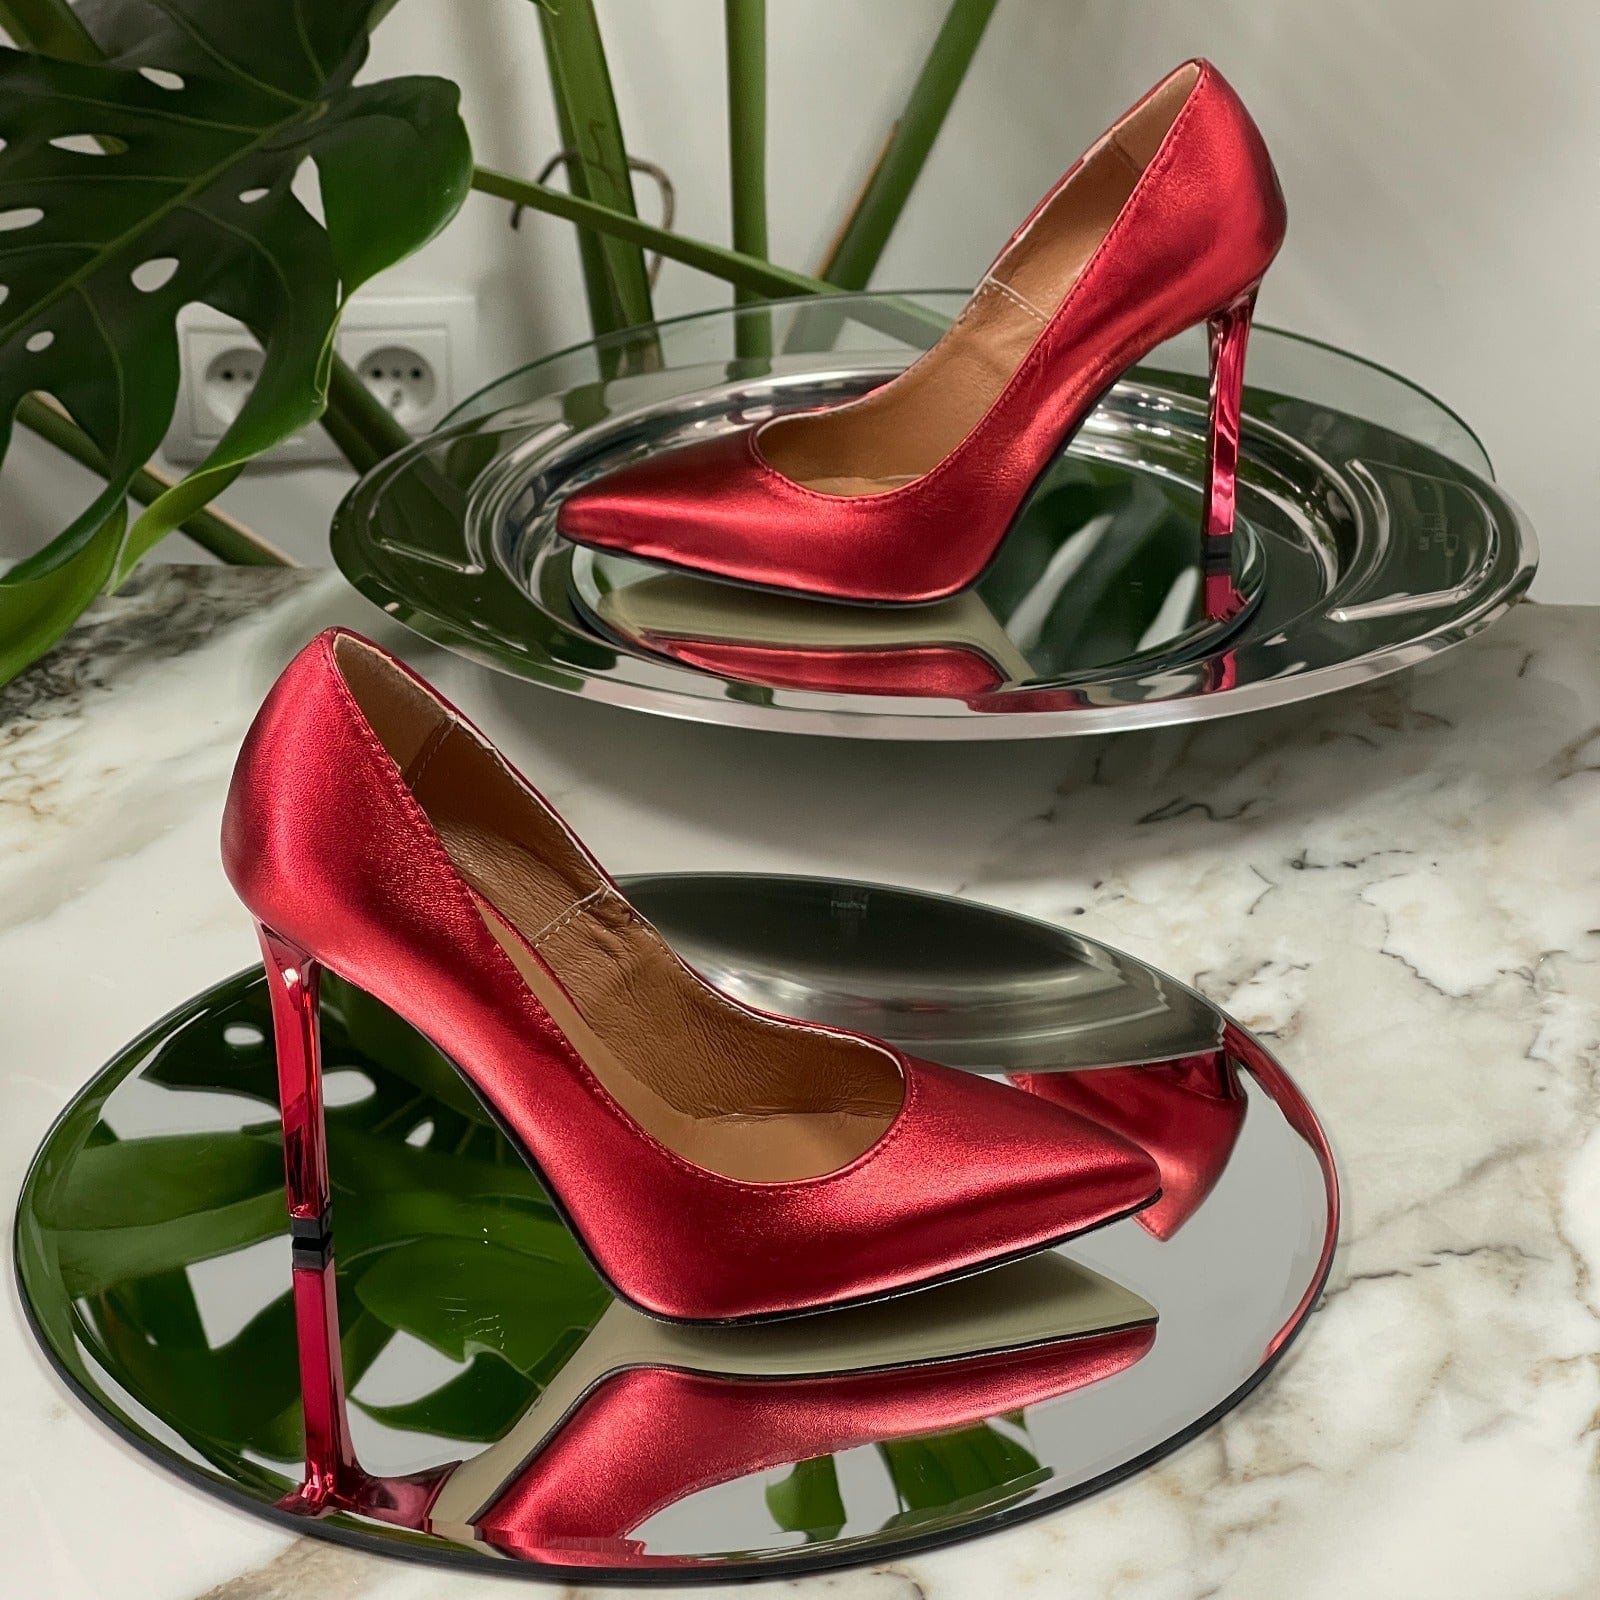 Metallic red leather petite court heels